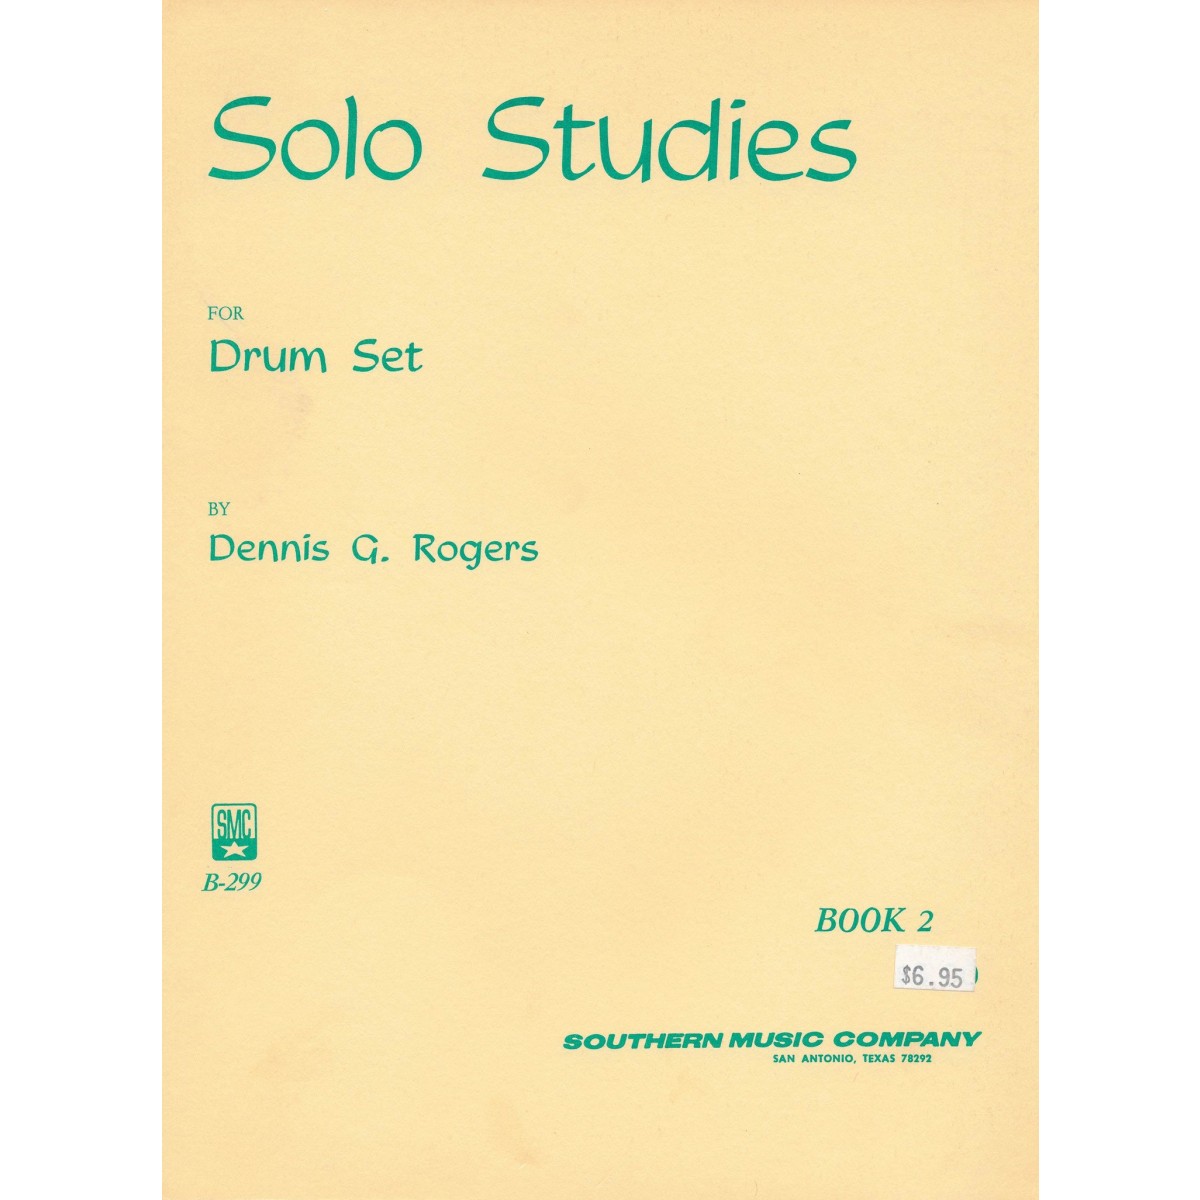 Solo Studies for Drum Set - book 2